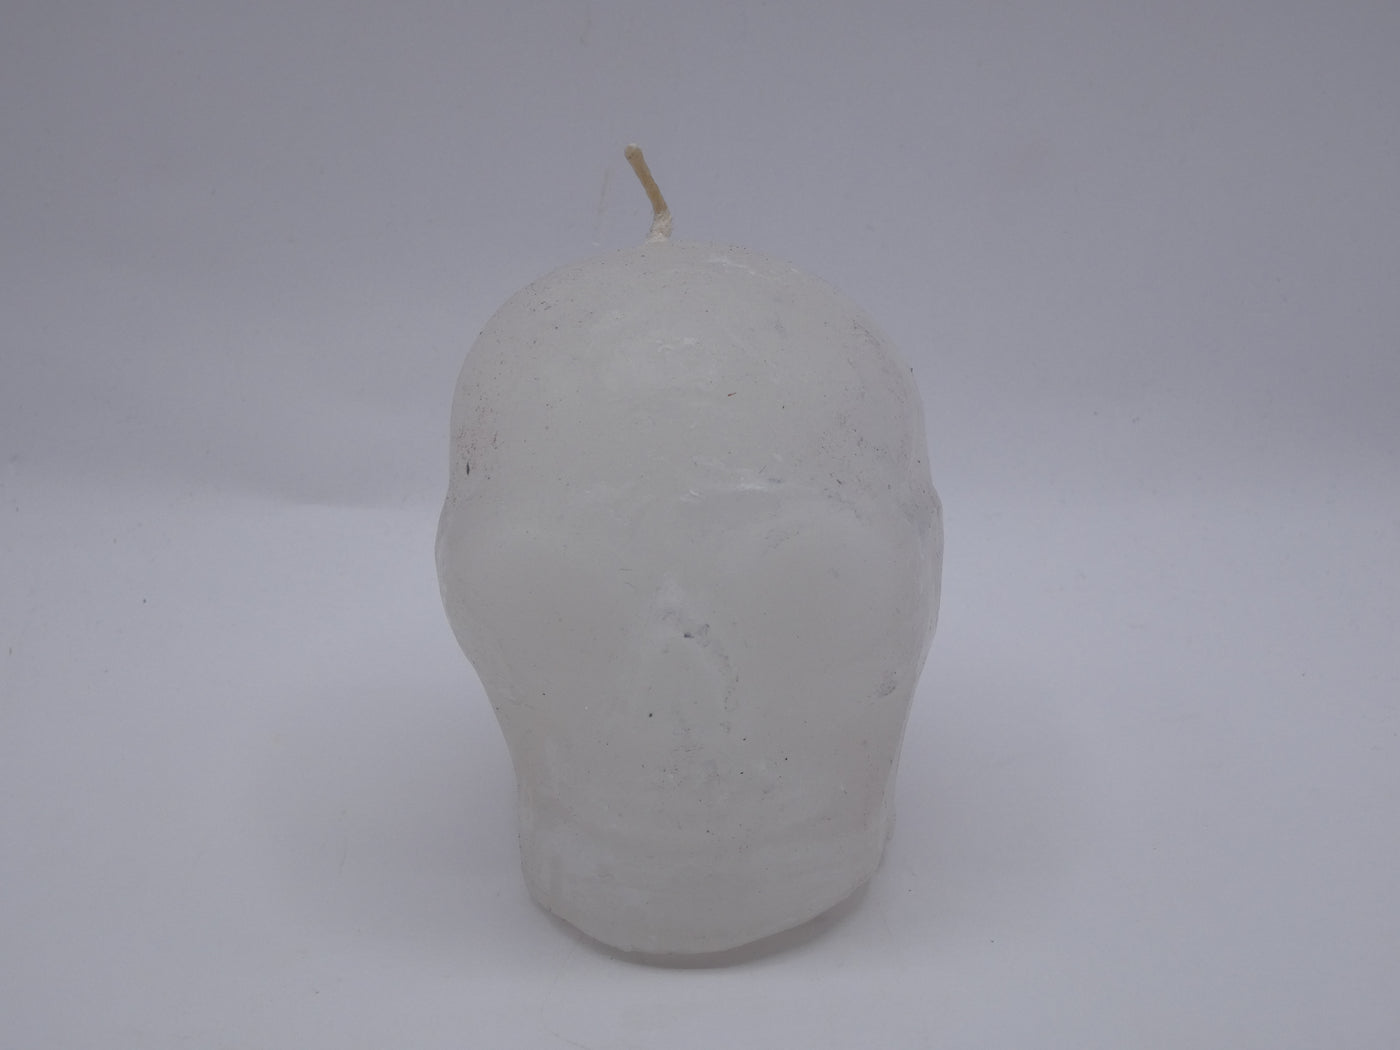 Beeswax Skull Candle Figure